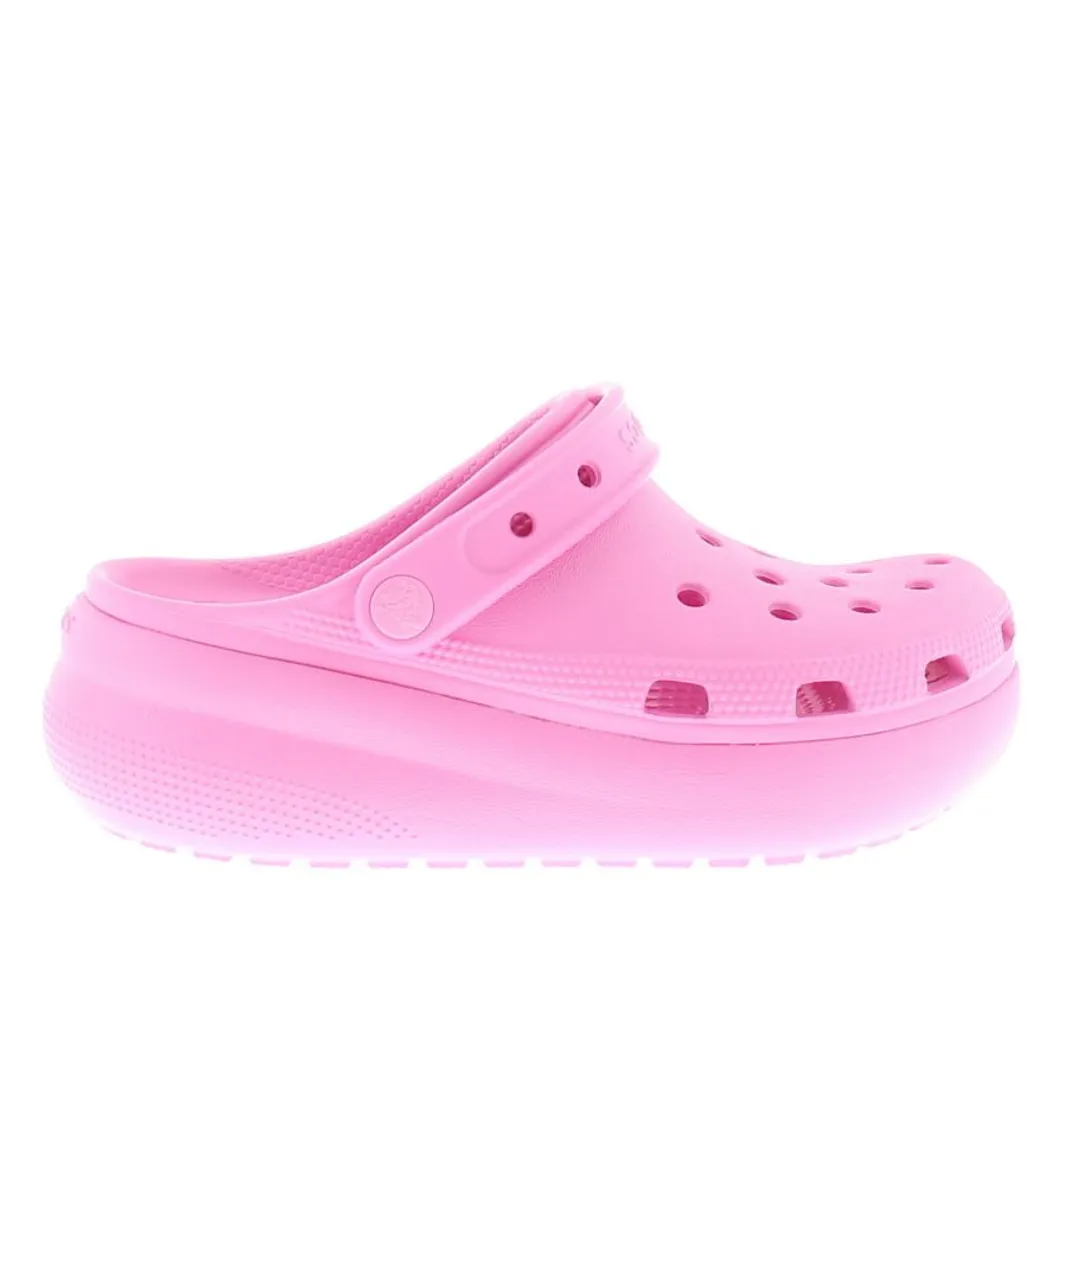 Crocs Older Girls Sandals Wedge Clogs Cutie Crush Clog Slip On pink